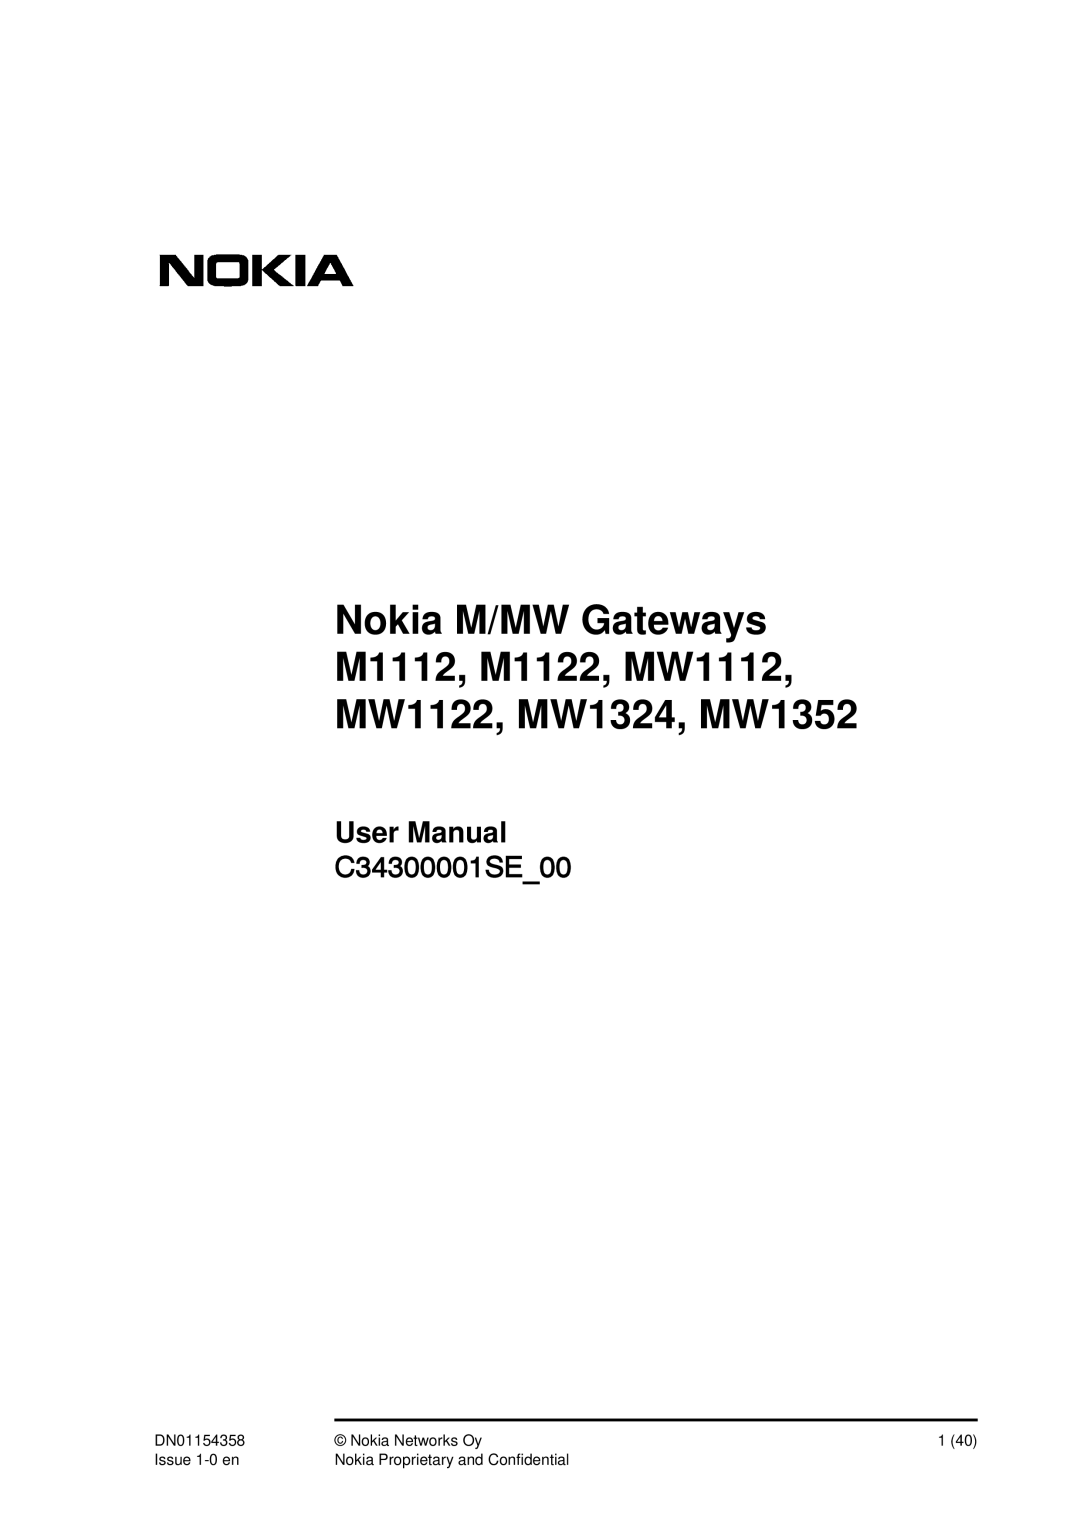 Nokia DSL Gateway High-Speed Internet Connection User Manual, C34300001SE00, DN01154358, Nokia Networks Oy, Issue 1-0 en 